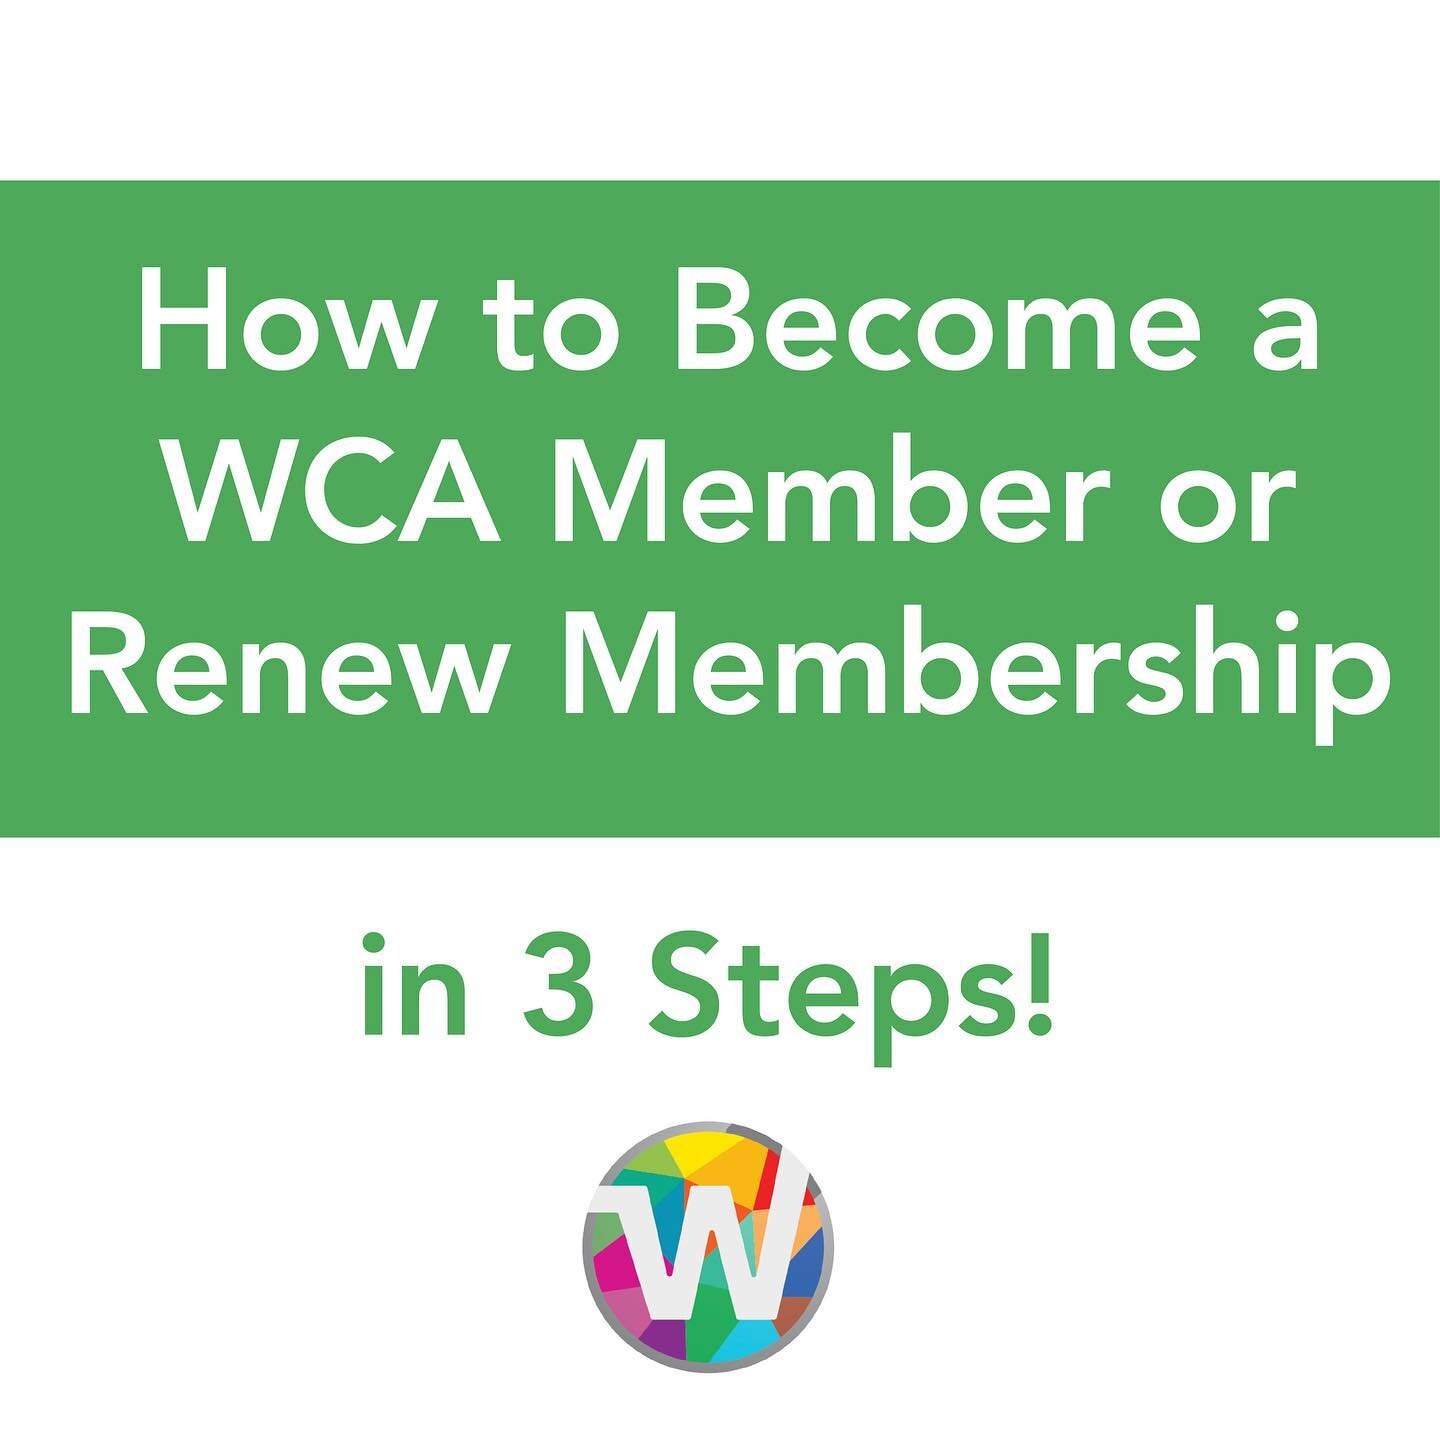 Renew your membership today! Link in bio. 

Visit nationalwca.org/wca-membership for more information.

#WomensCaucusforArt